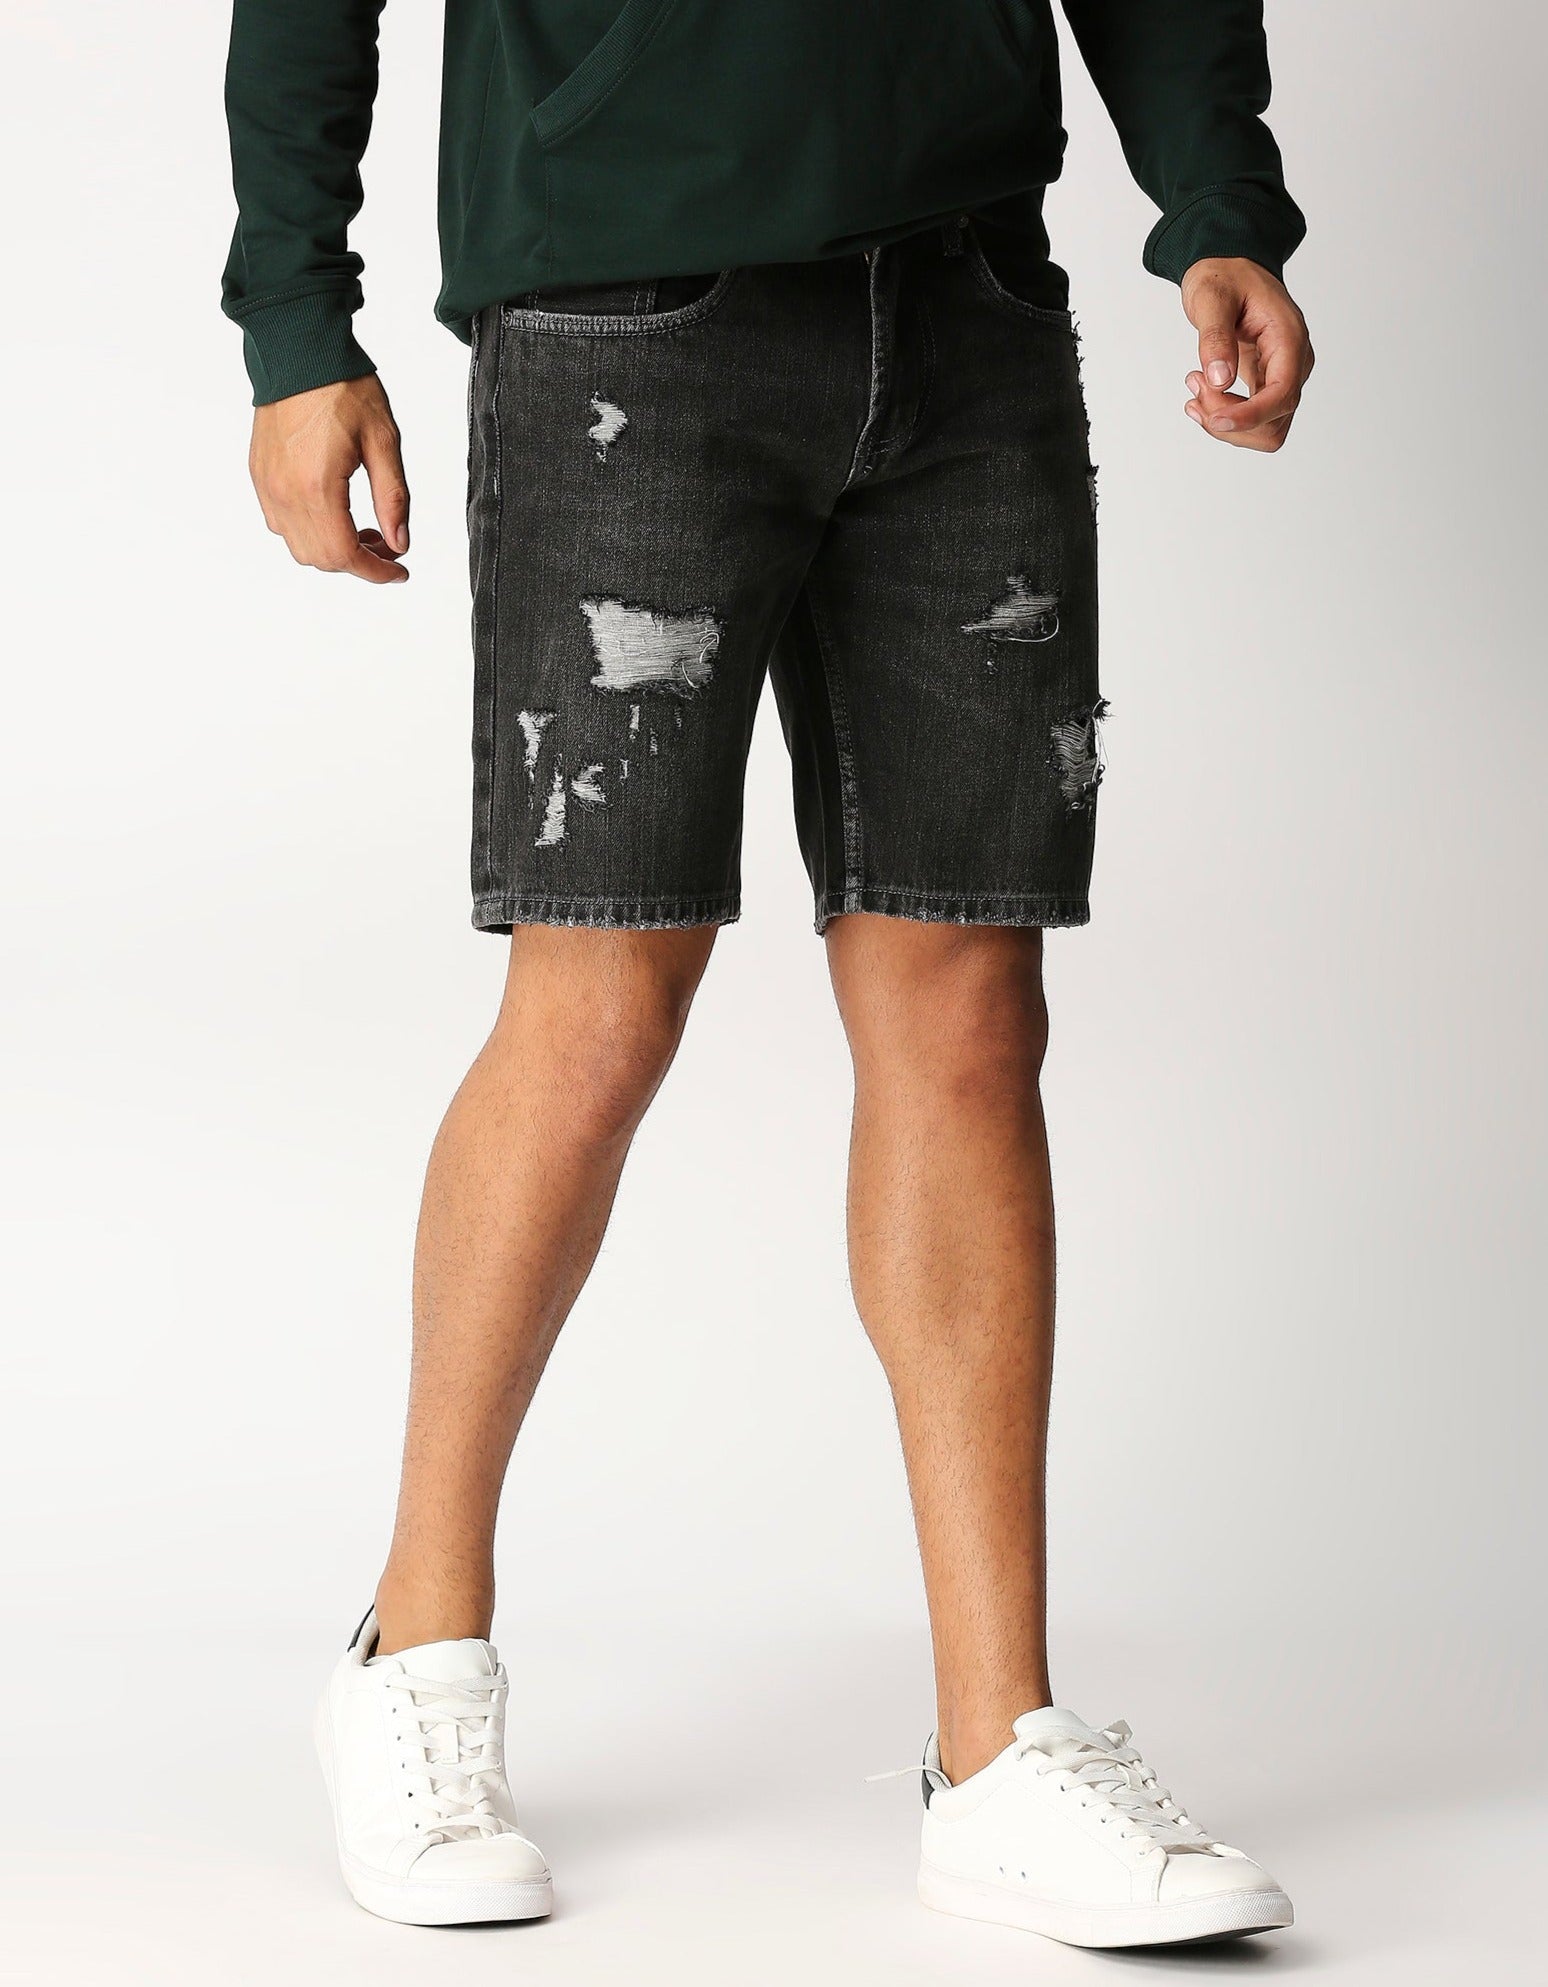 Fostino Carbon Black Denim Distress Shorts - Fostino Shorts